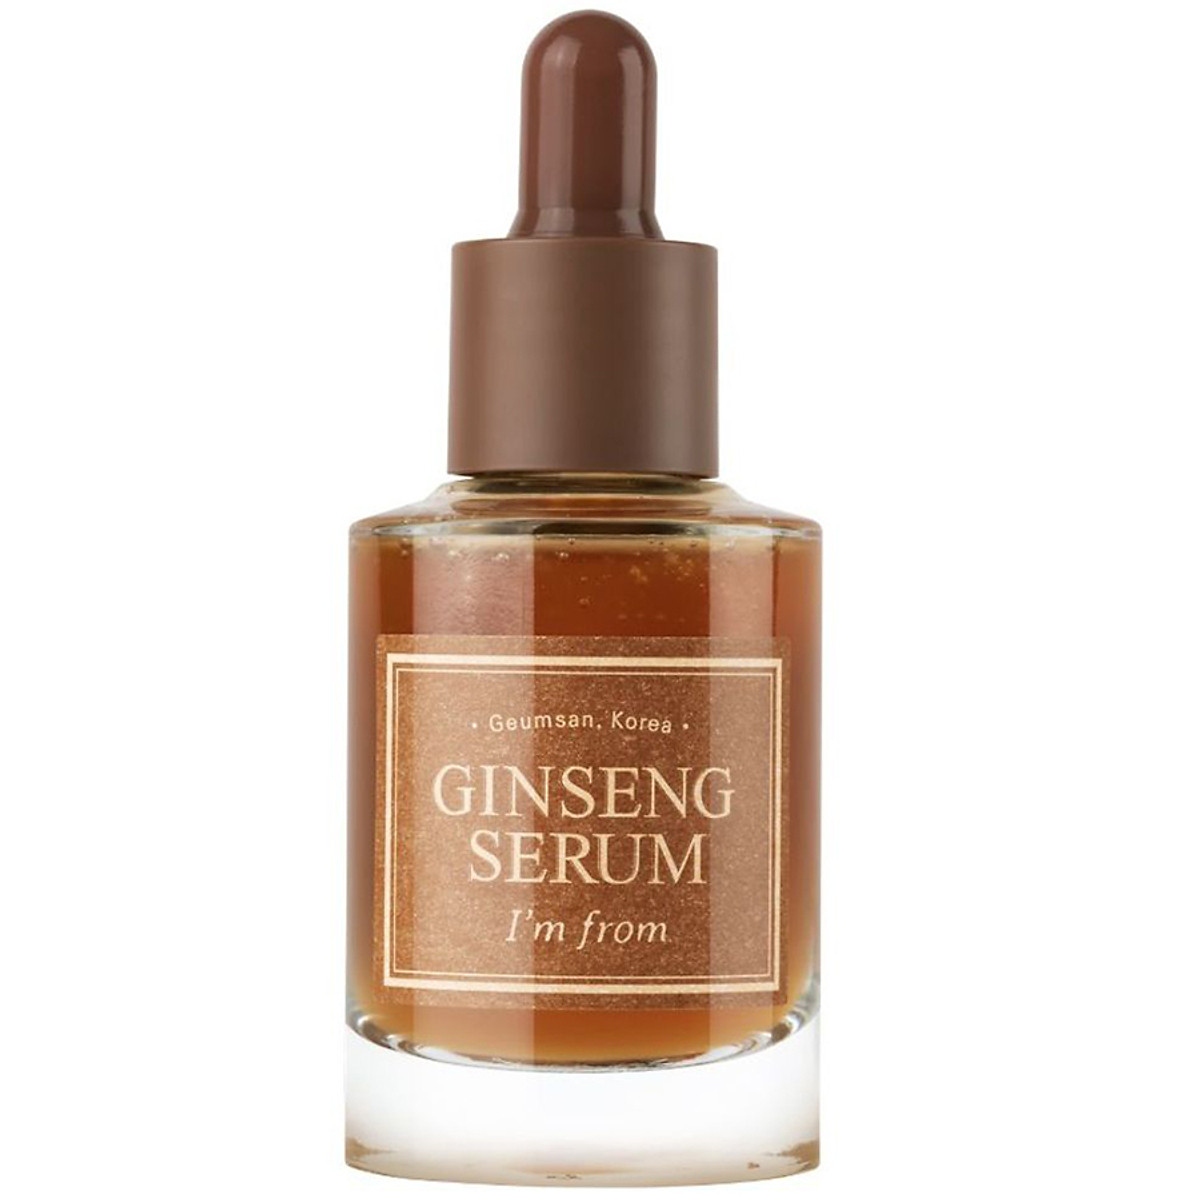 Tinh chất dưỡng da I'm from Ginseng serum (30ml)